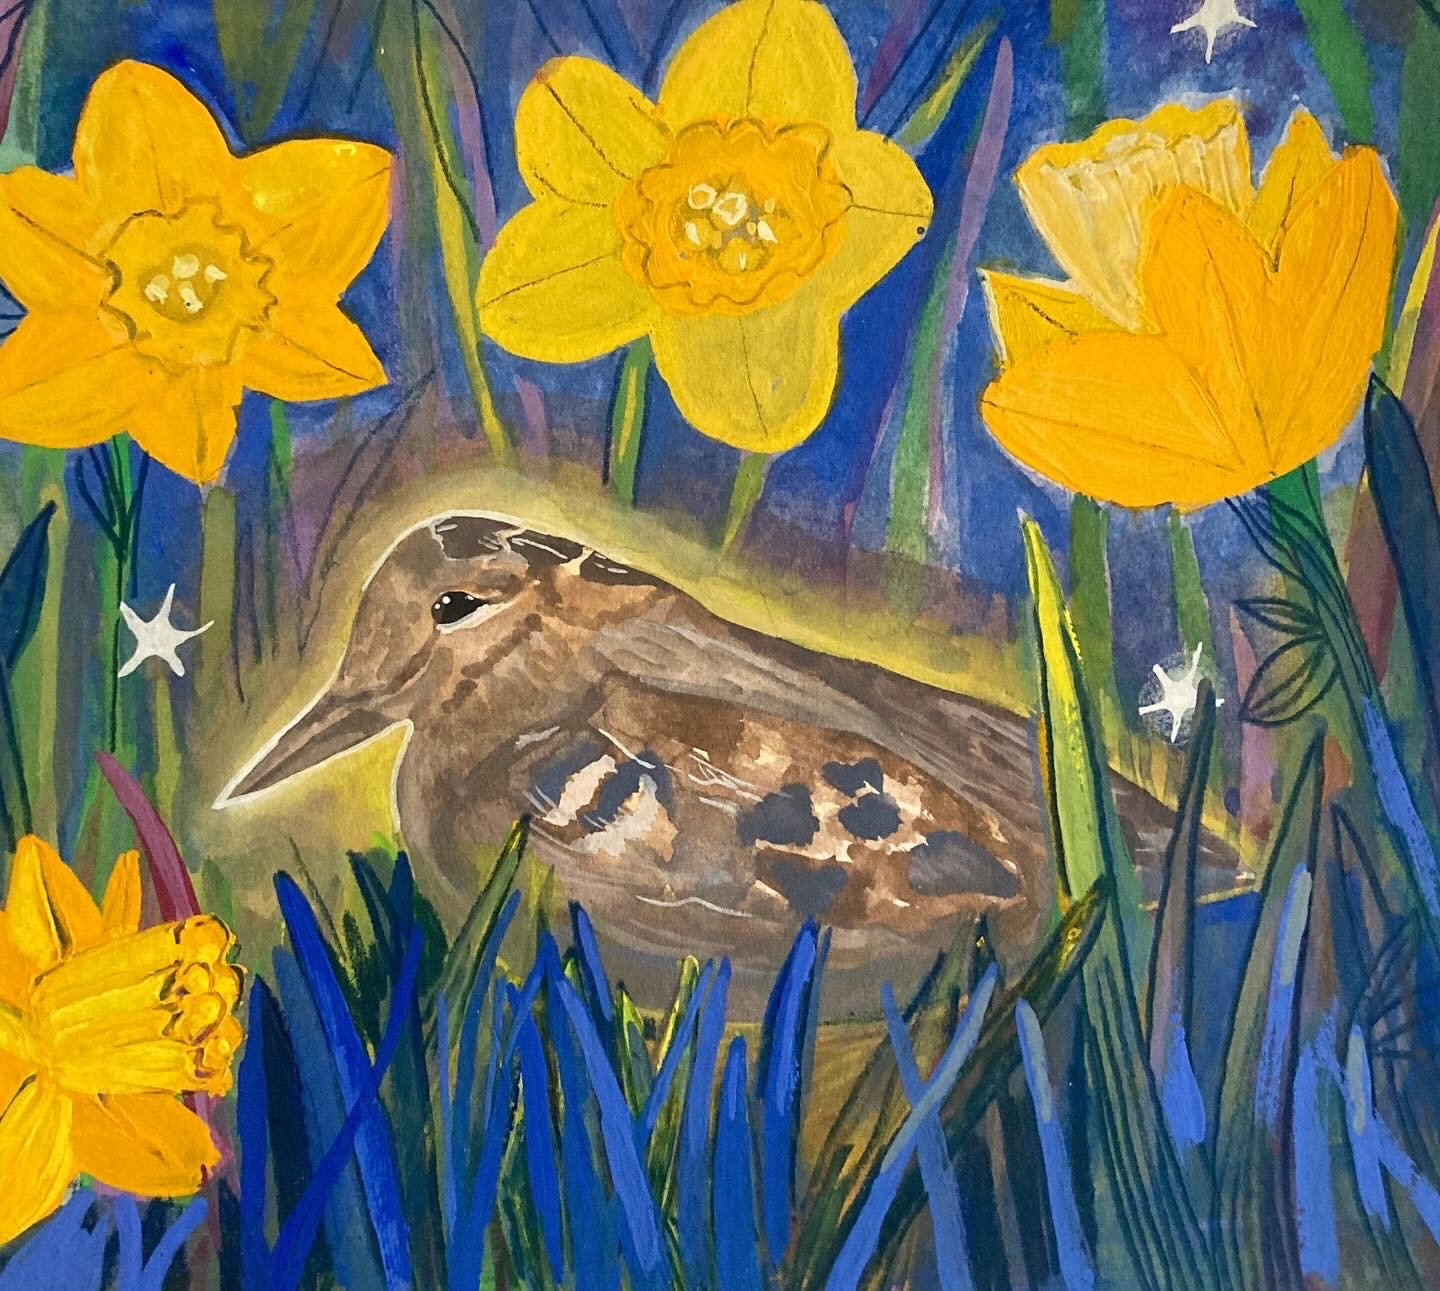 Woodcock in the Daffodils